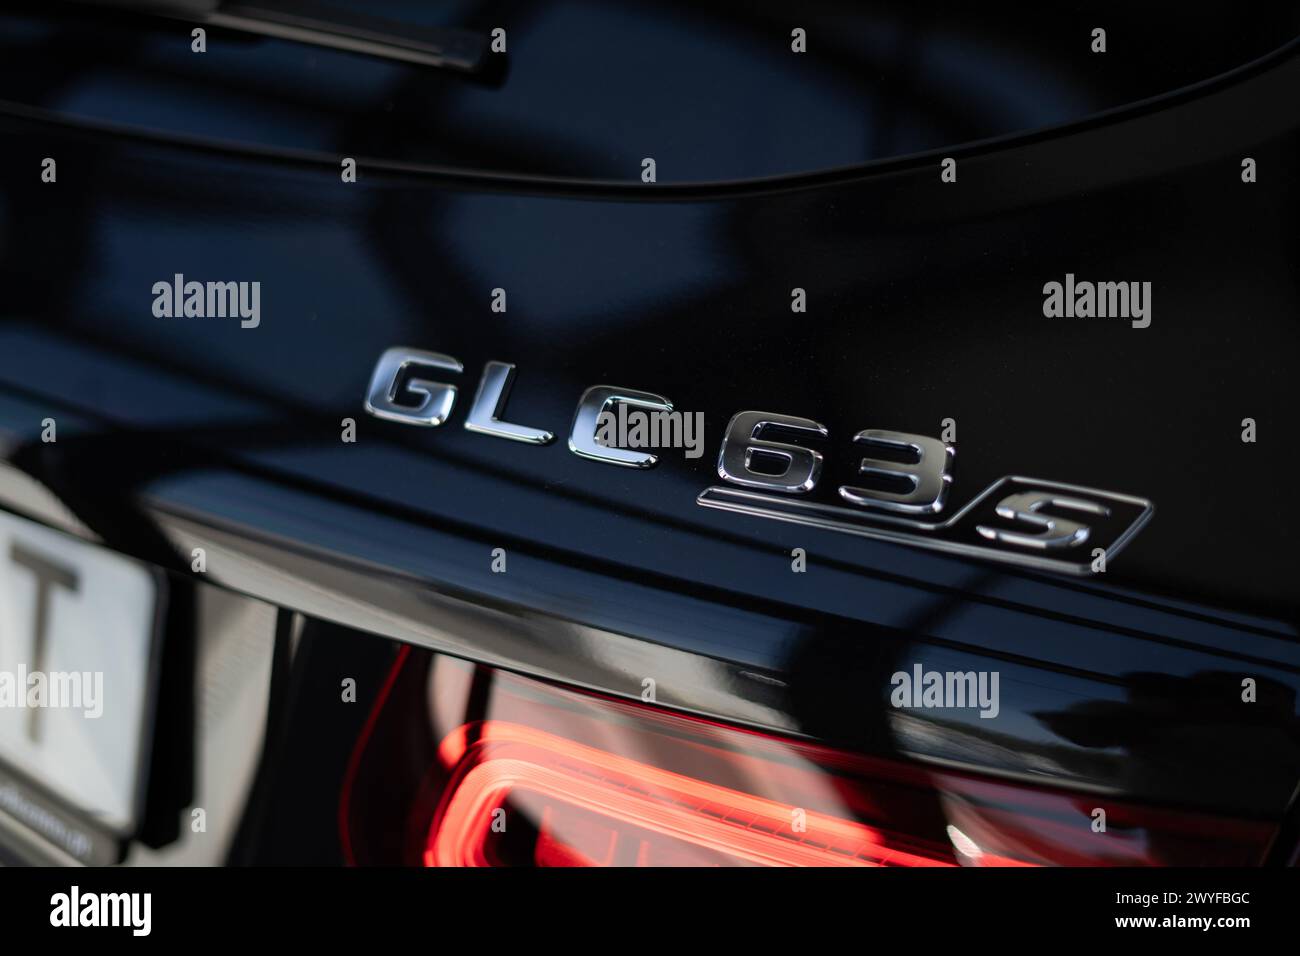 Mercedes AMG GLC63 Stock Photo